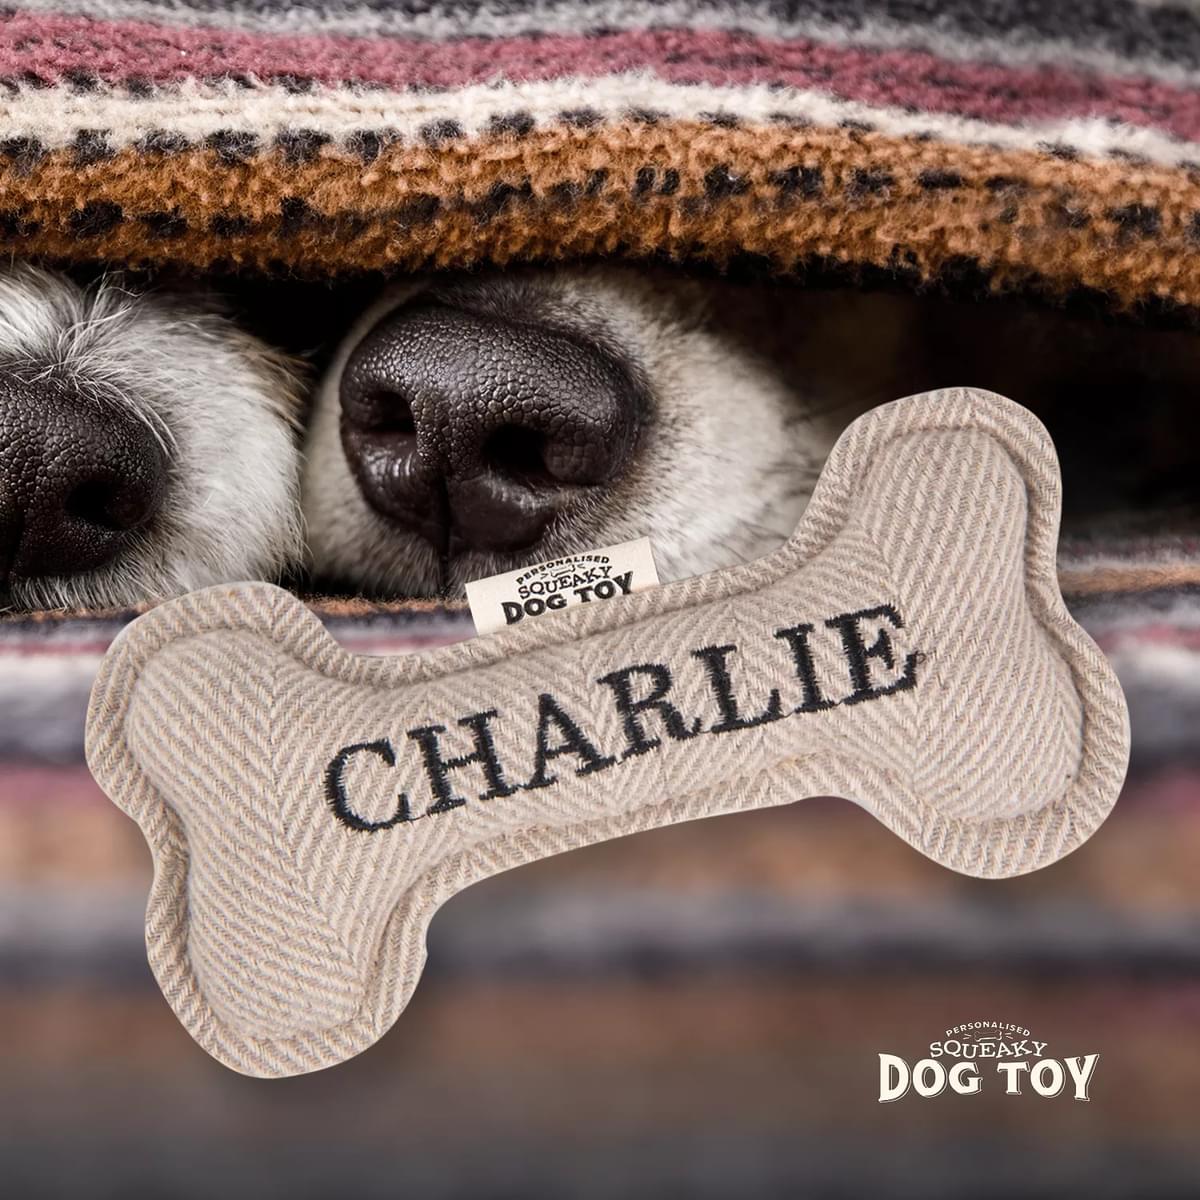 Named Squeaky Dog Toy- Charlie. Bone shaped herringbone tweed pattern dog toy. 